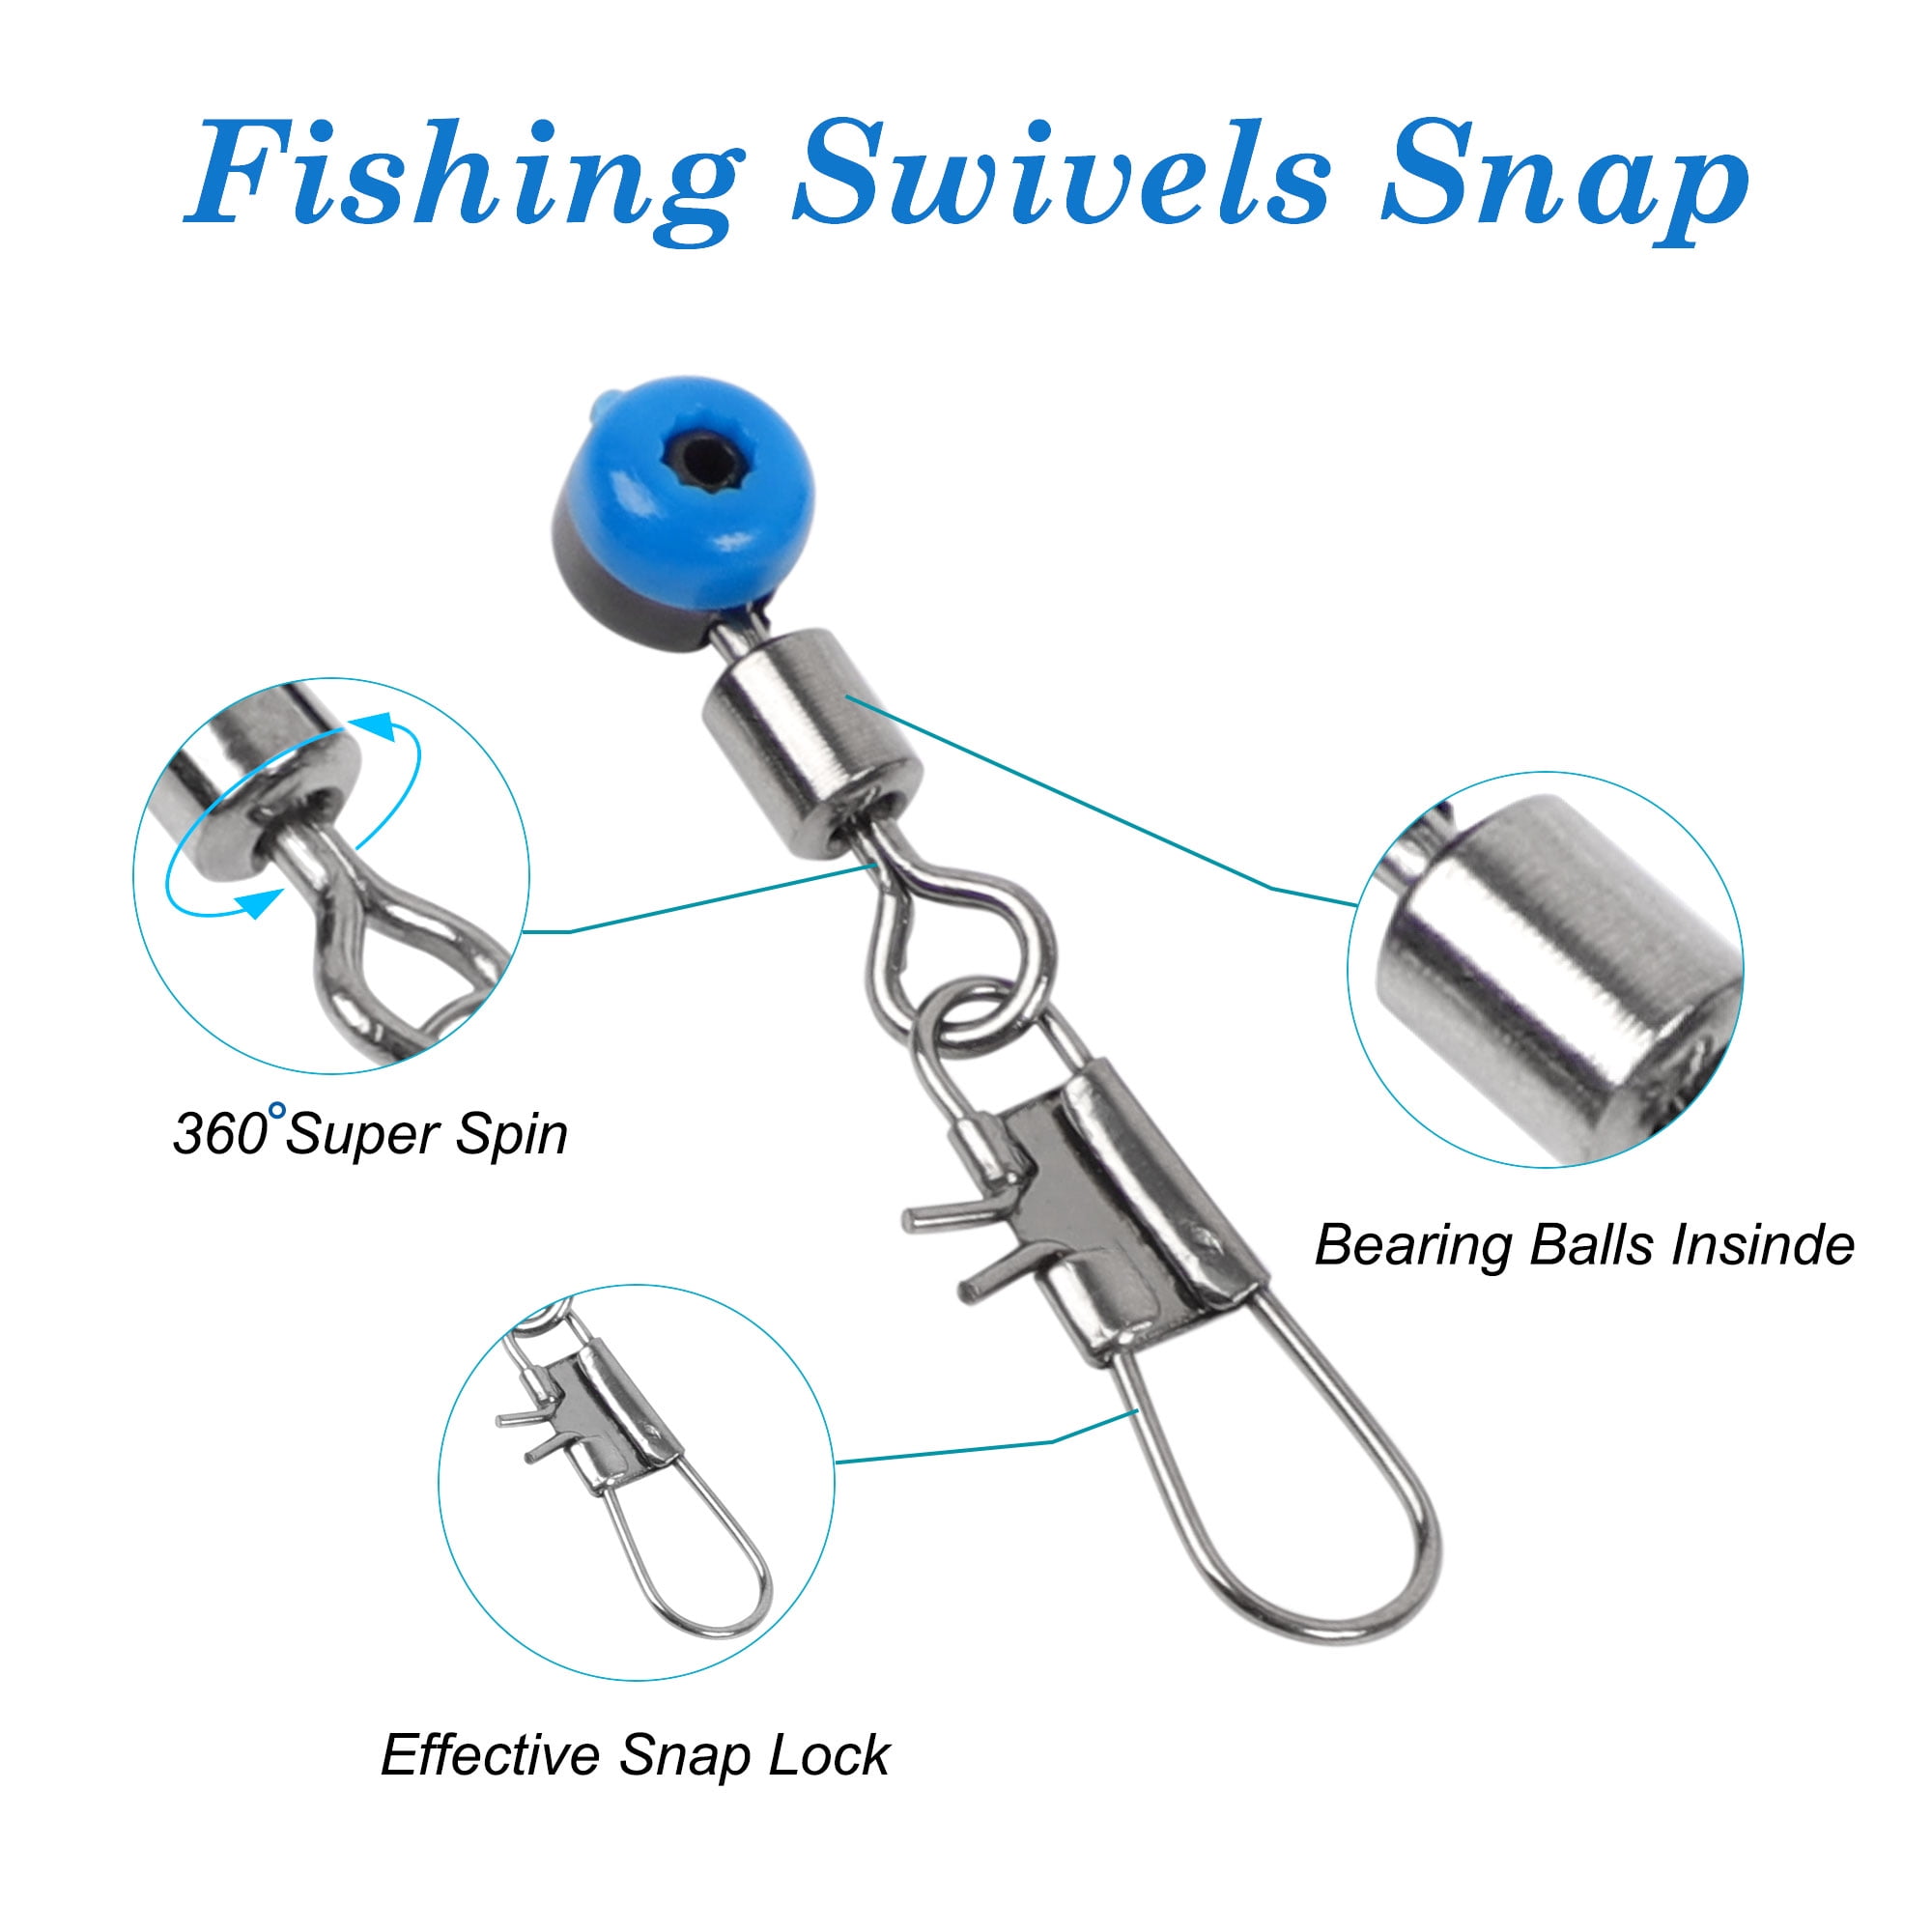 10PCS Fishing Swivels Snap Swivels Barrel Swivels with Interlock